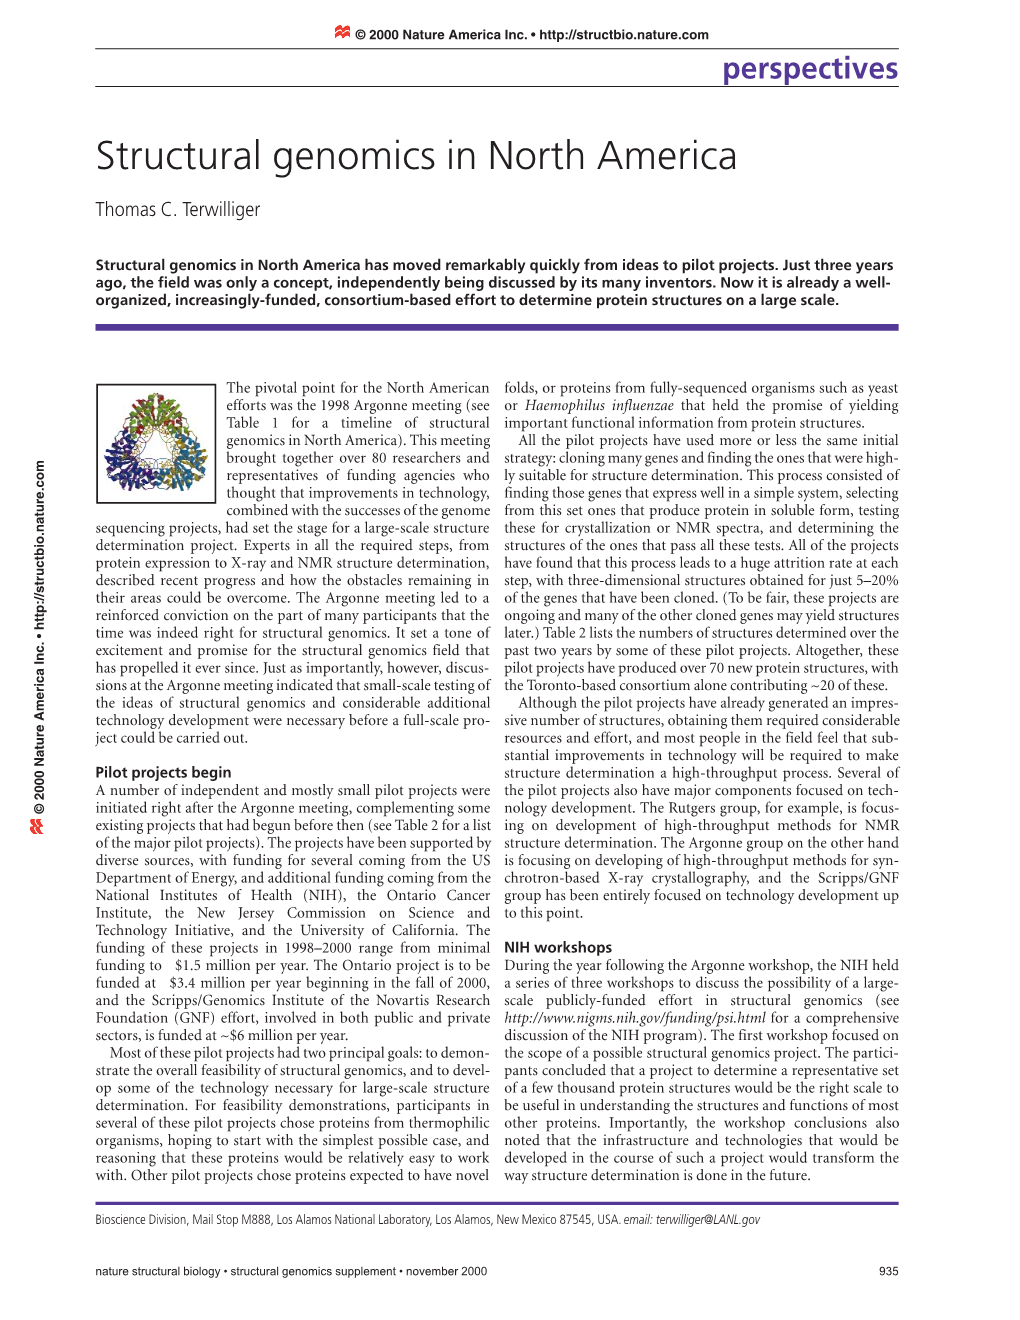 Structural Genomics in North America